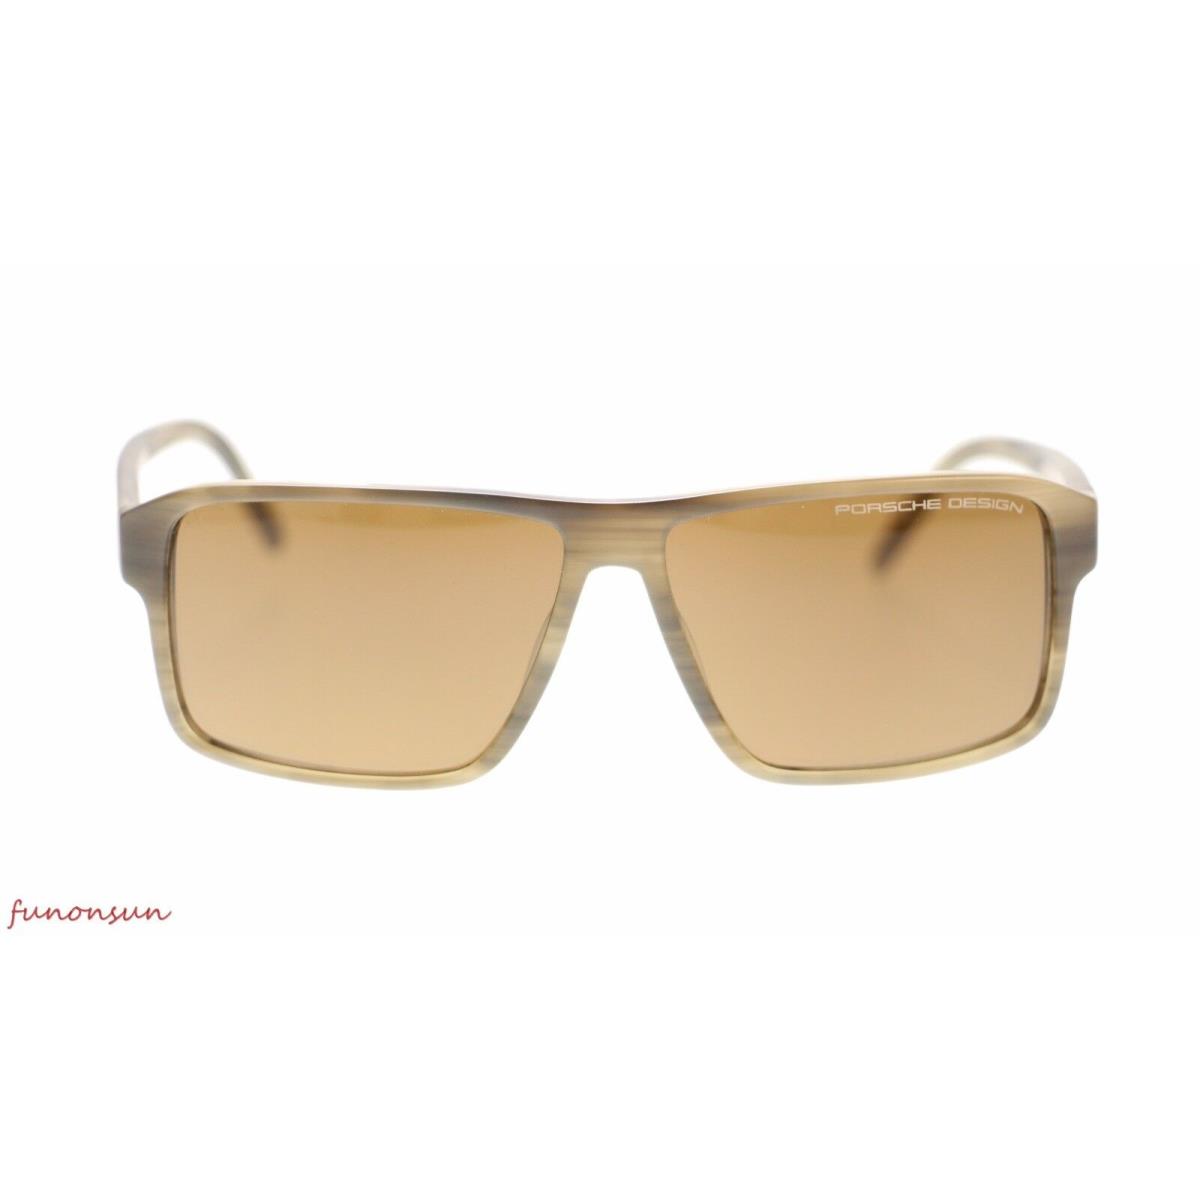 Porsche Design Men`s Sunglasses P8634 D Olive Structured Lens Brown 57mm